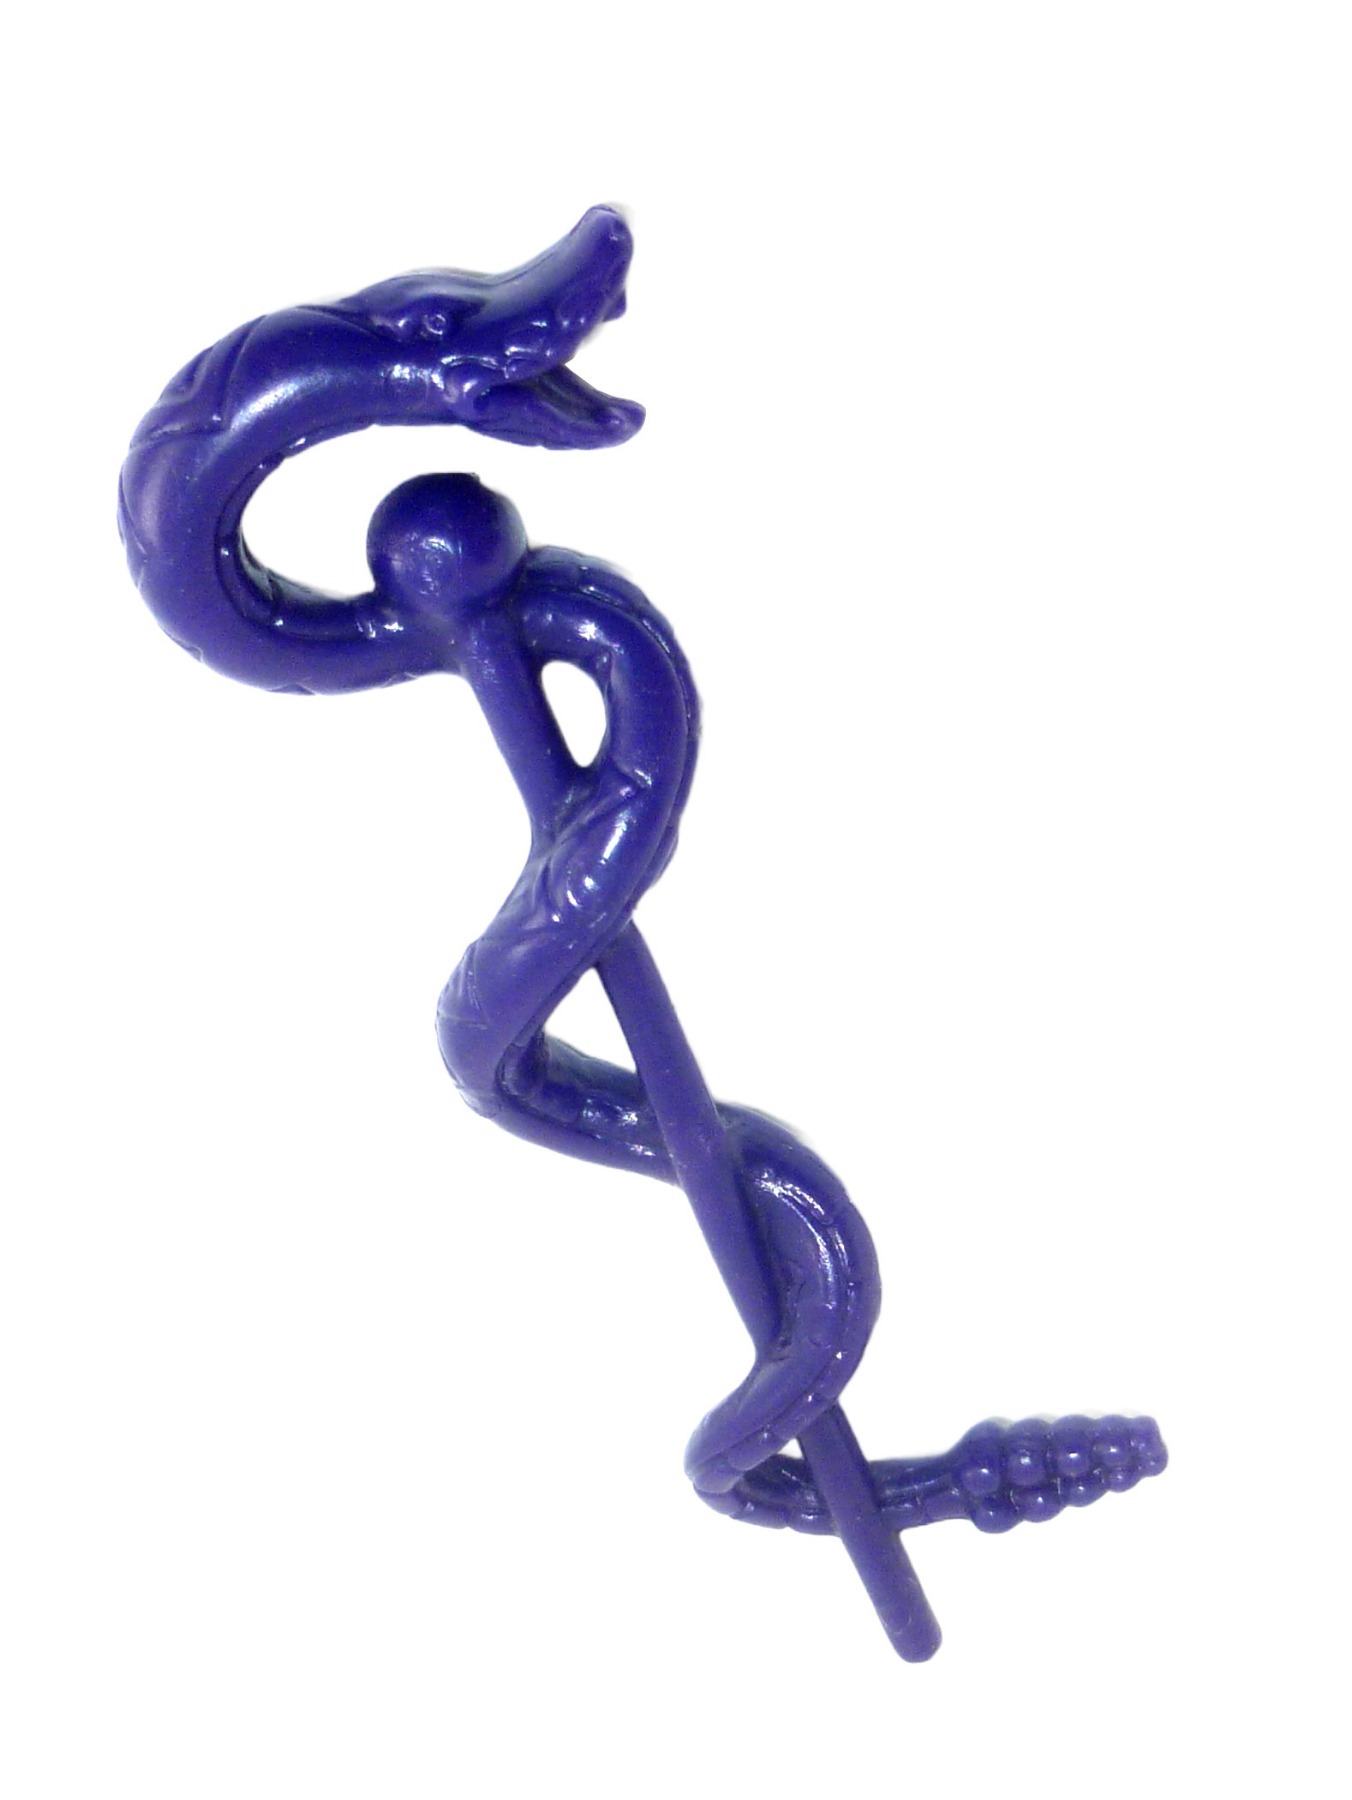 Tung Lashor Serpent Staff / Weapon 2